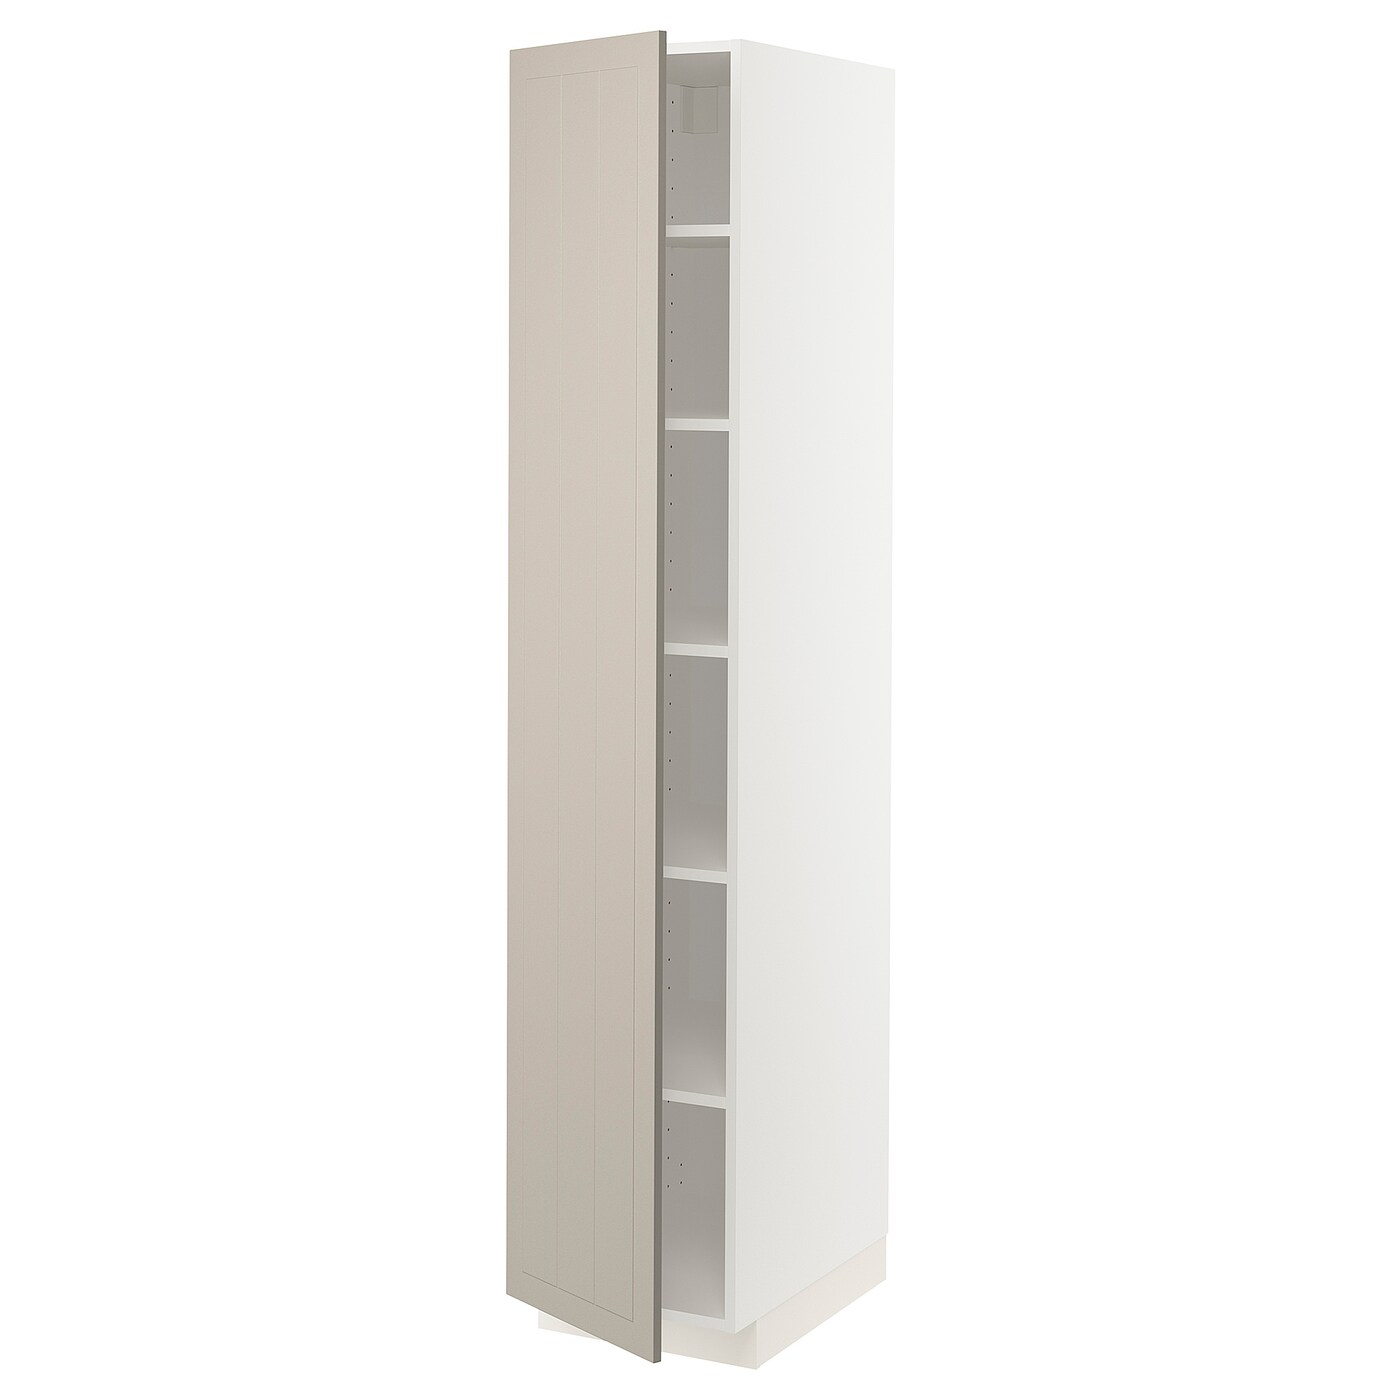 Высокий кухонный шкаф с полками - IKEA METOD/МЕТОД ИКЕА, 200х60х40 см, белый/бежевый